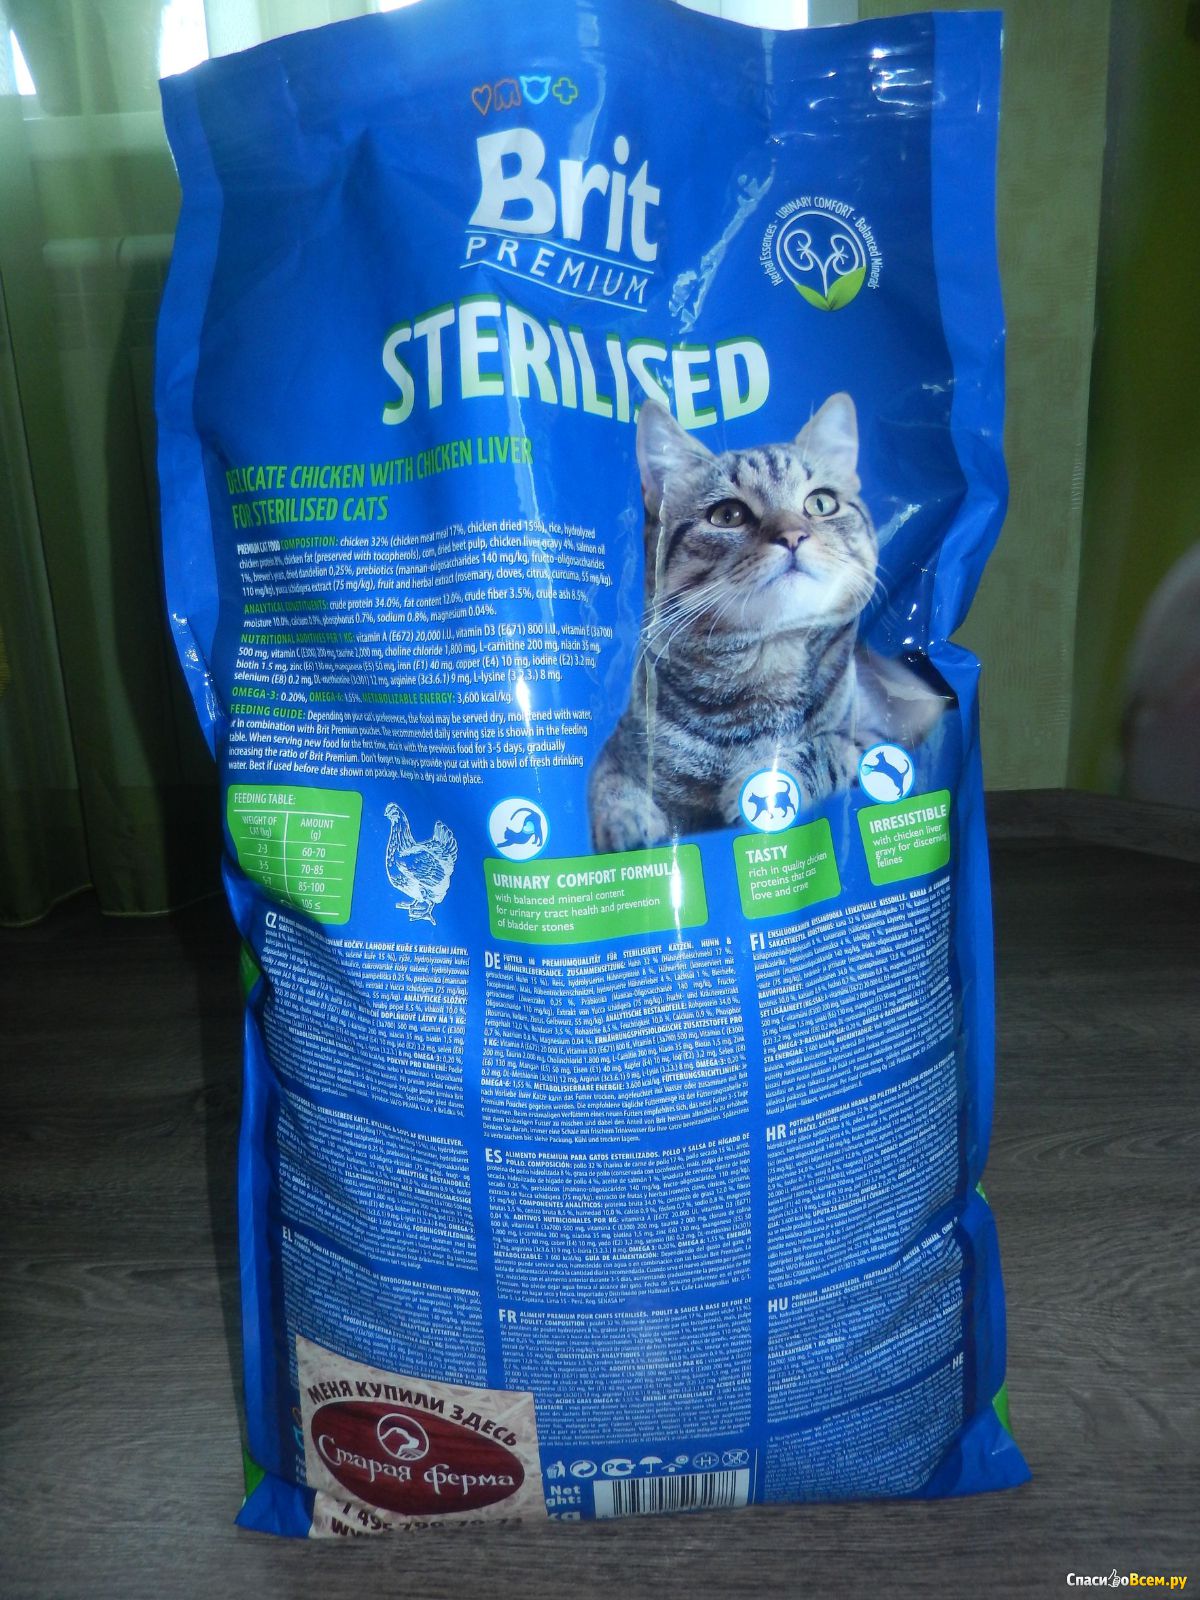 Корм брит 15 кг. Brit Sterilised корм для кошек. Брит корм для кошек стерилизованных сухой. Brit Premium для кошек Sterilised состав. Брит премиум для стерилизованных кошек состав.